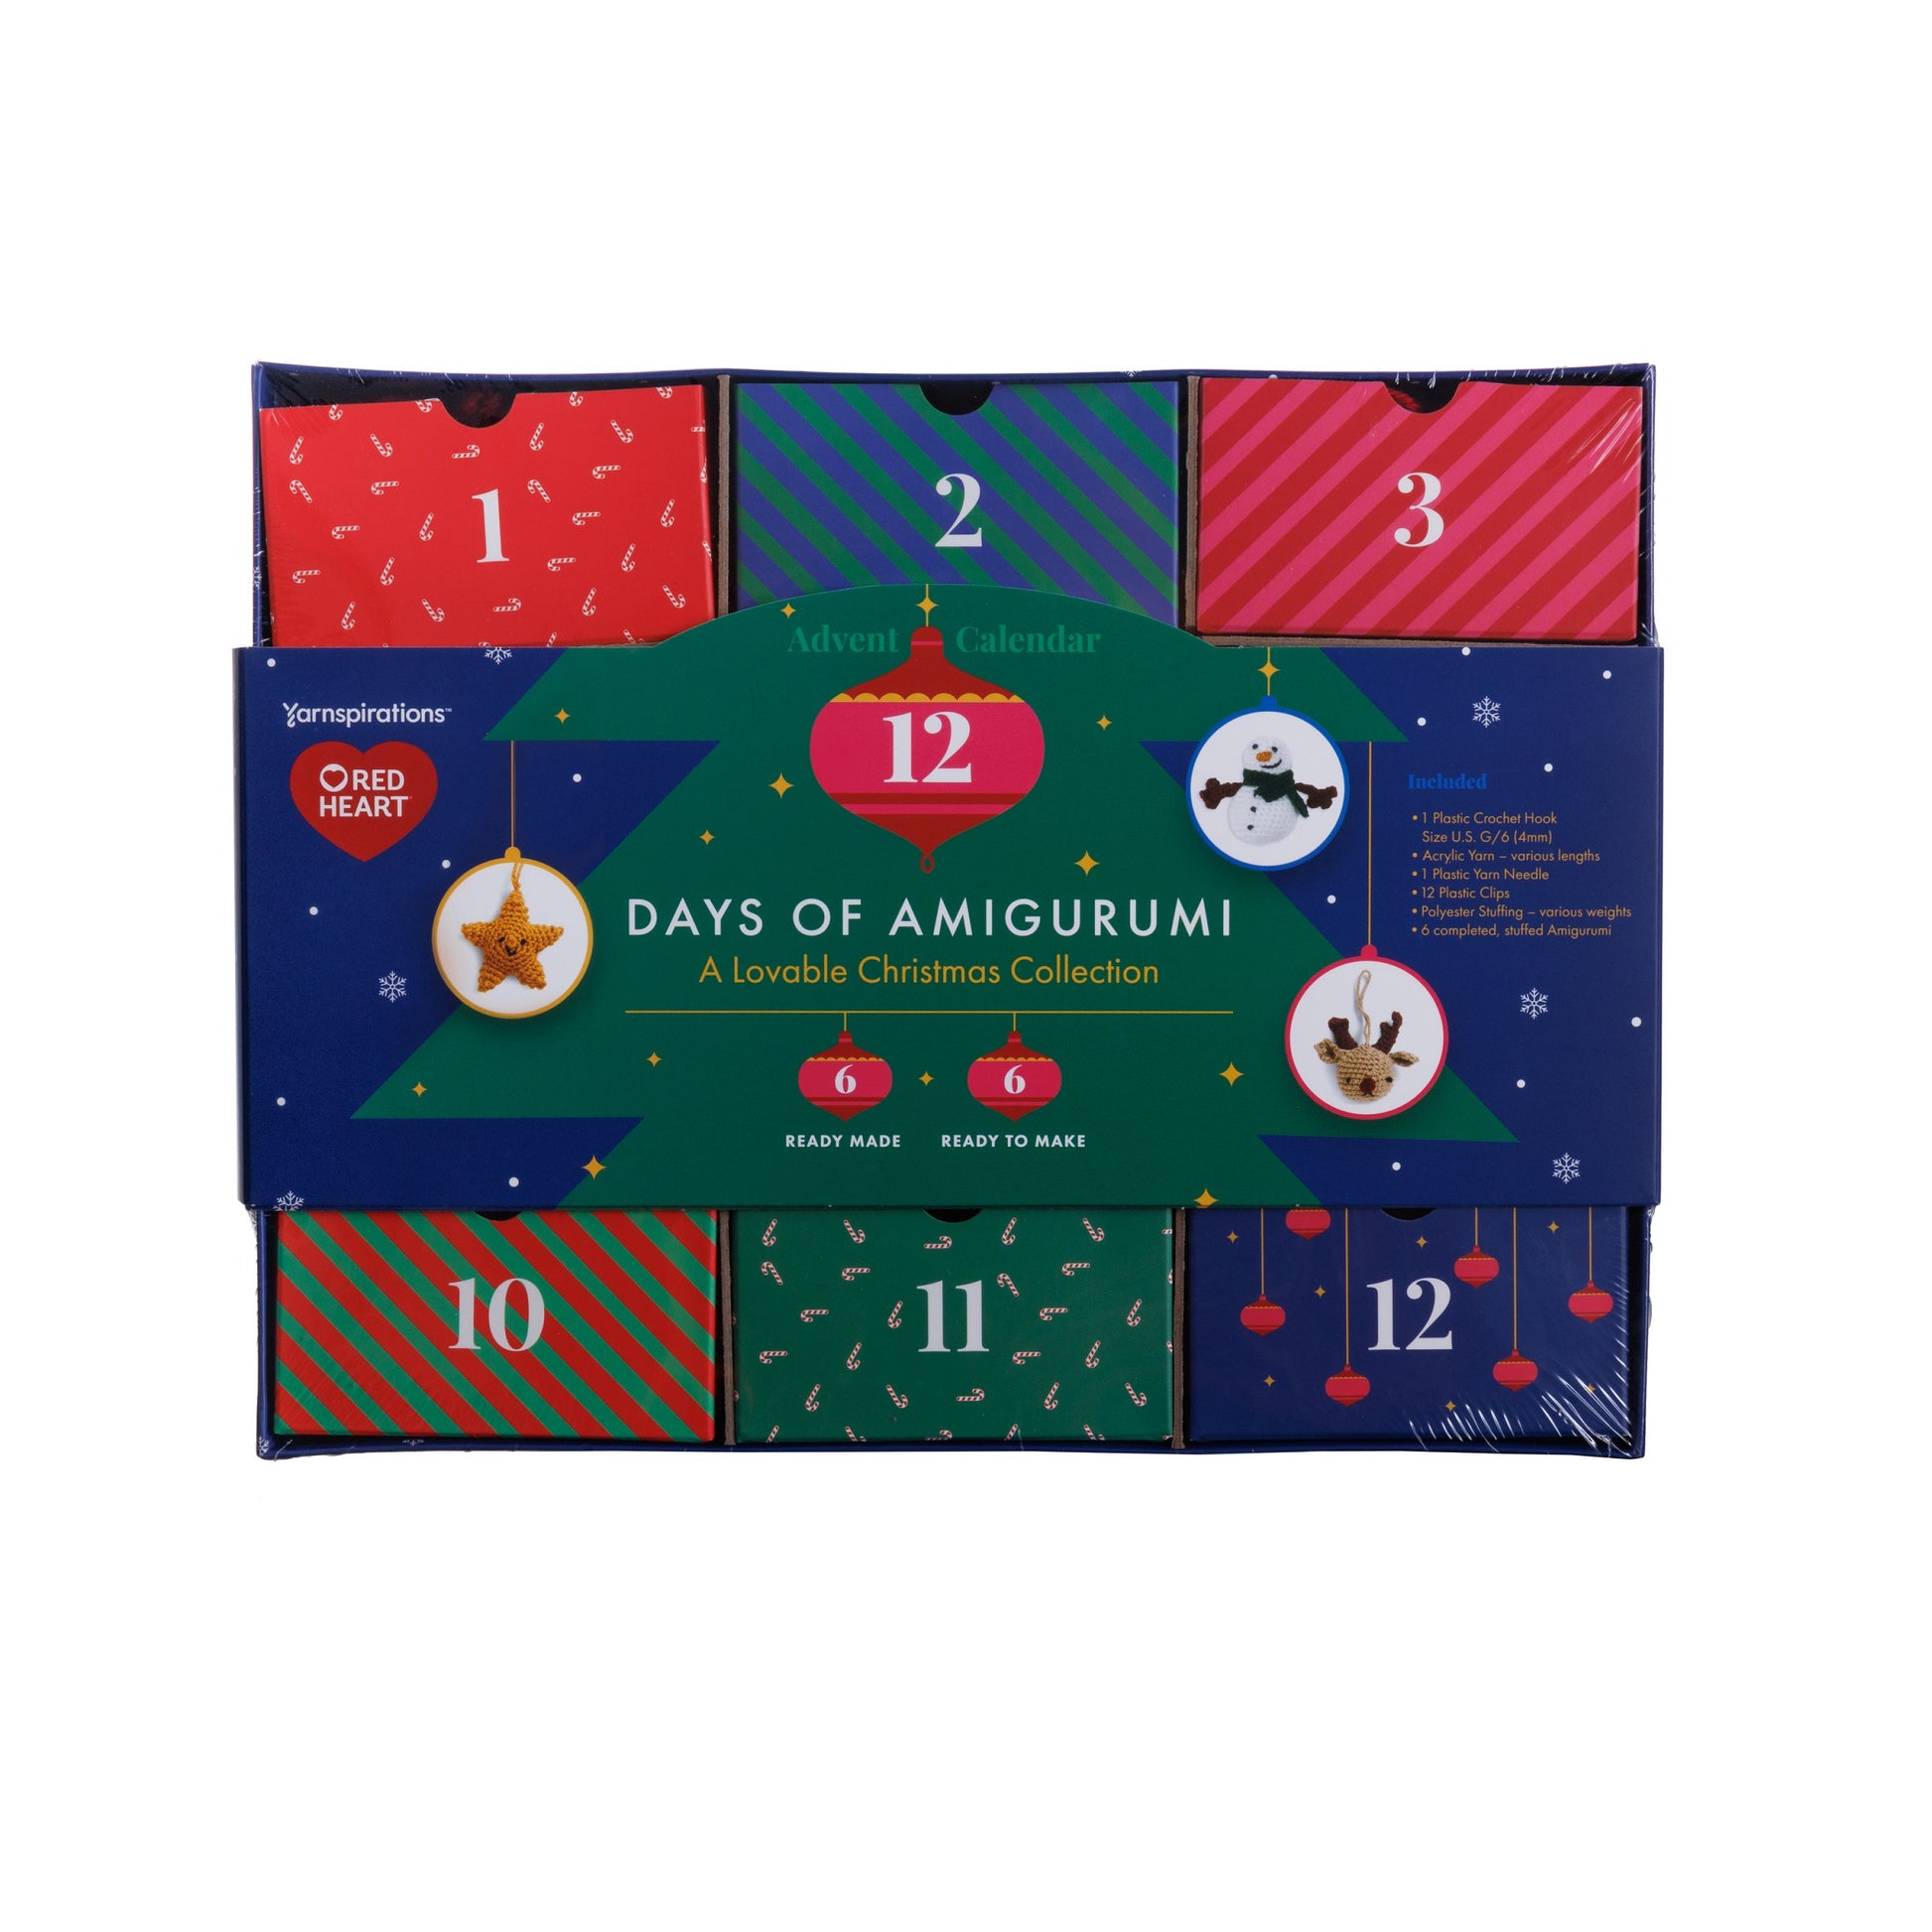 Red Heart Advent Calendar Kit